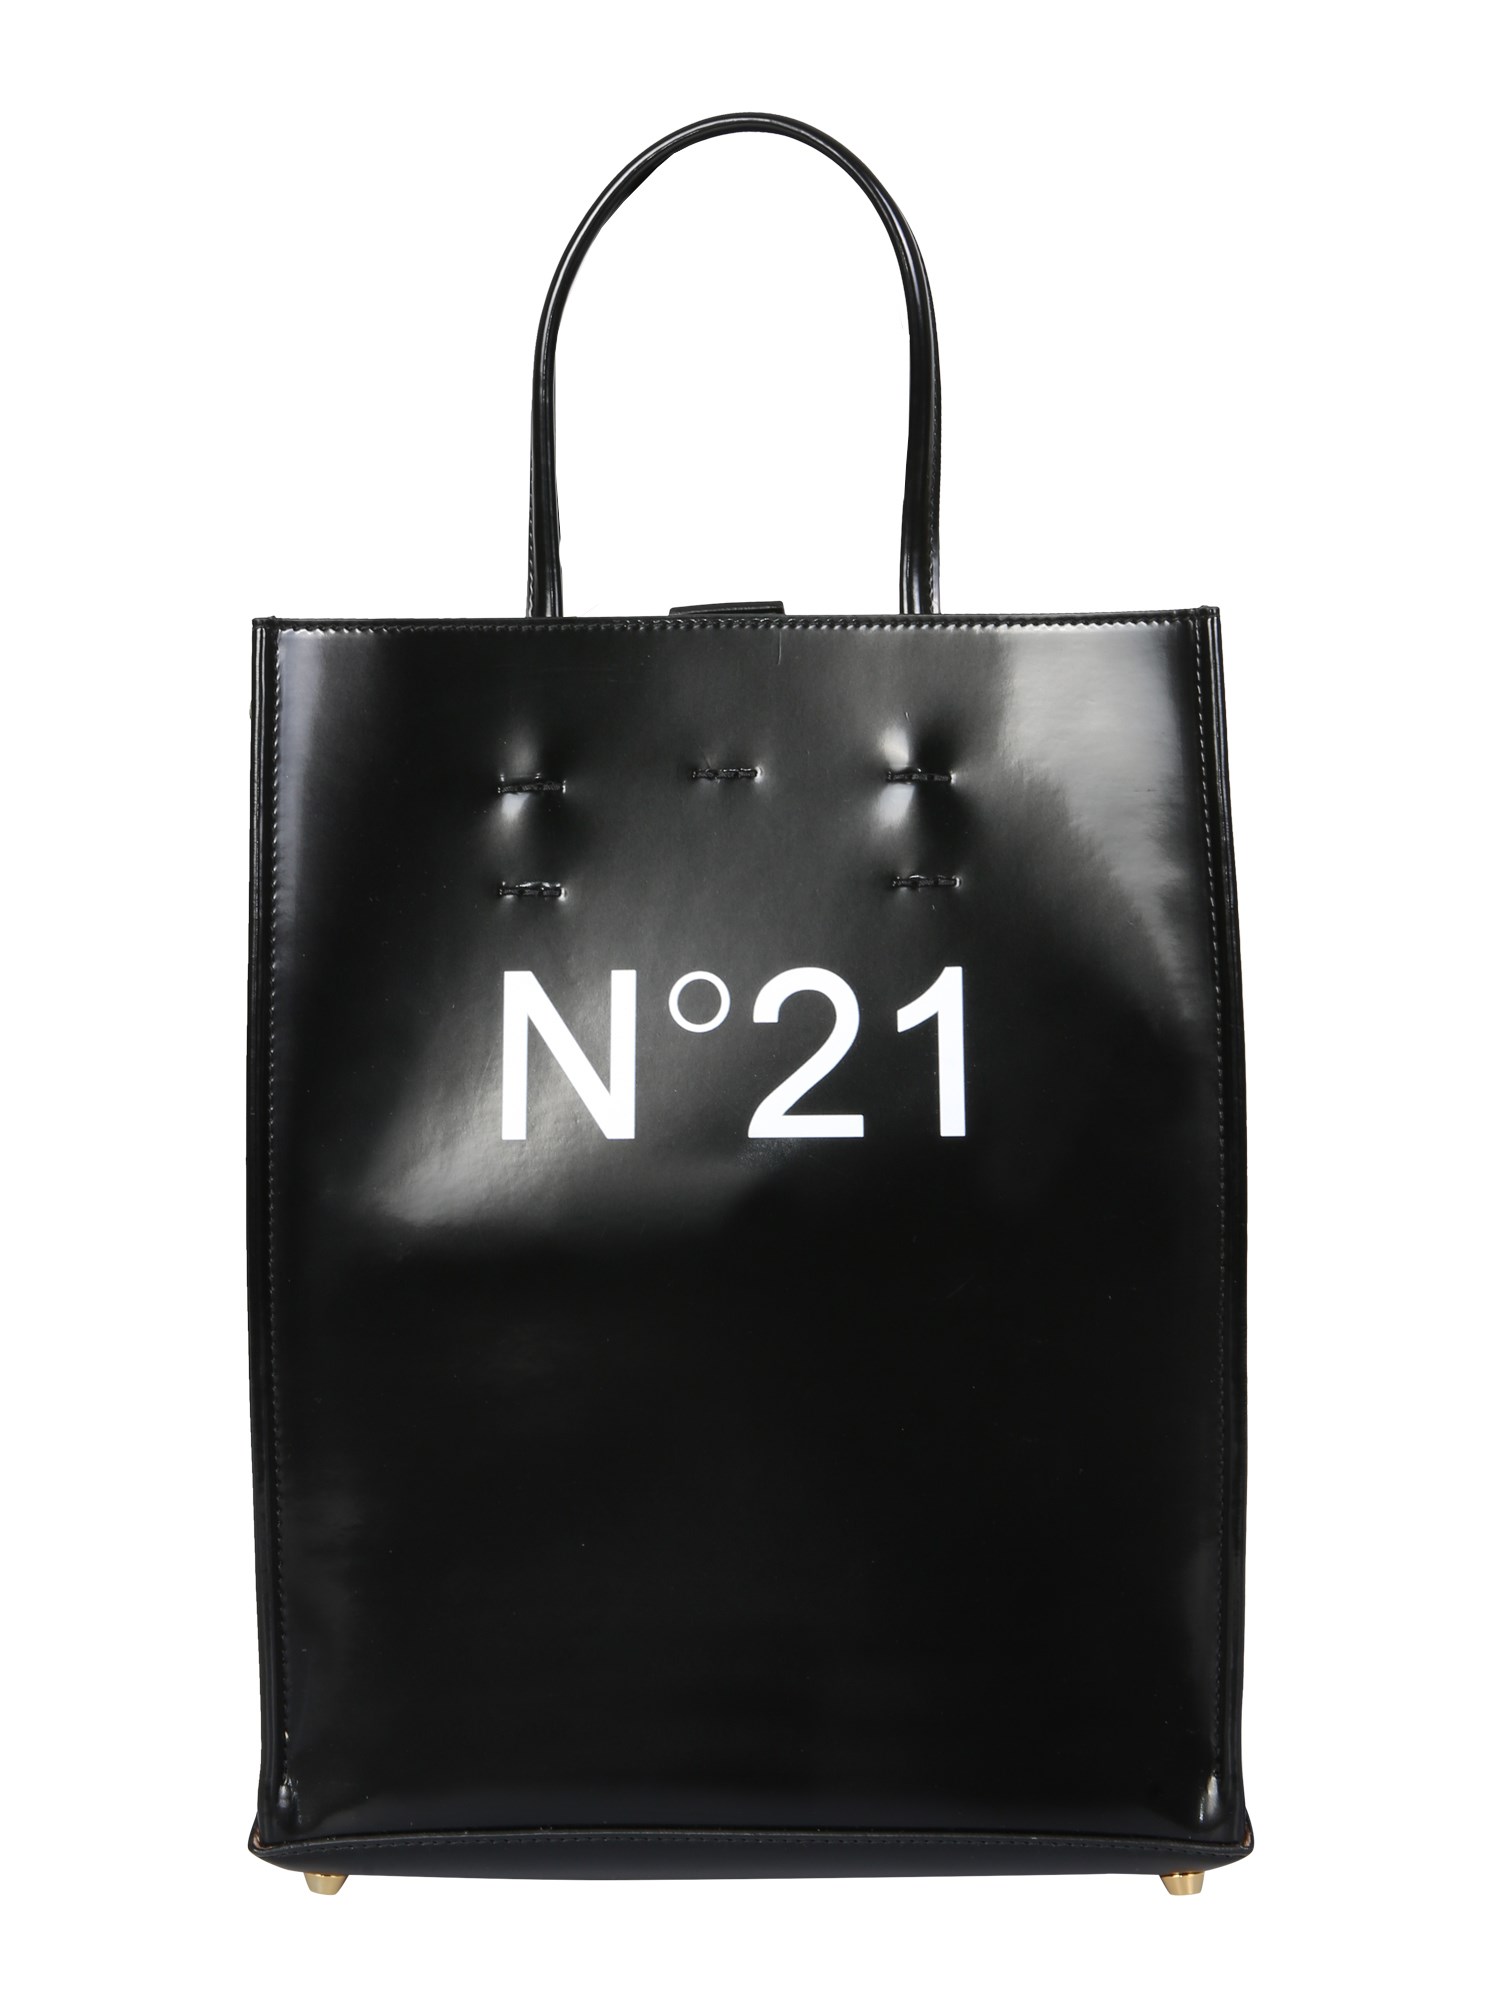 n°21 vertical shopping bag